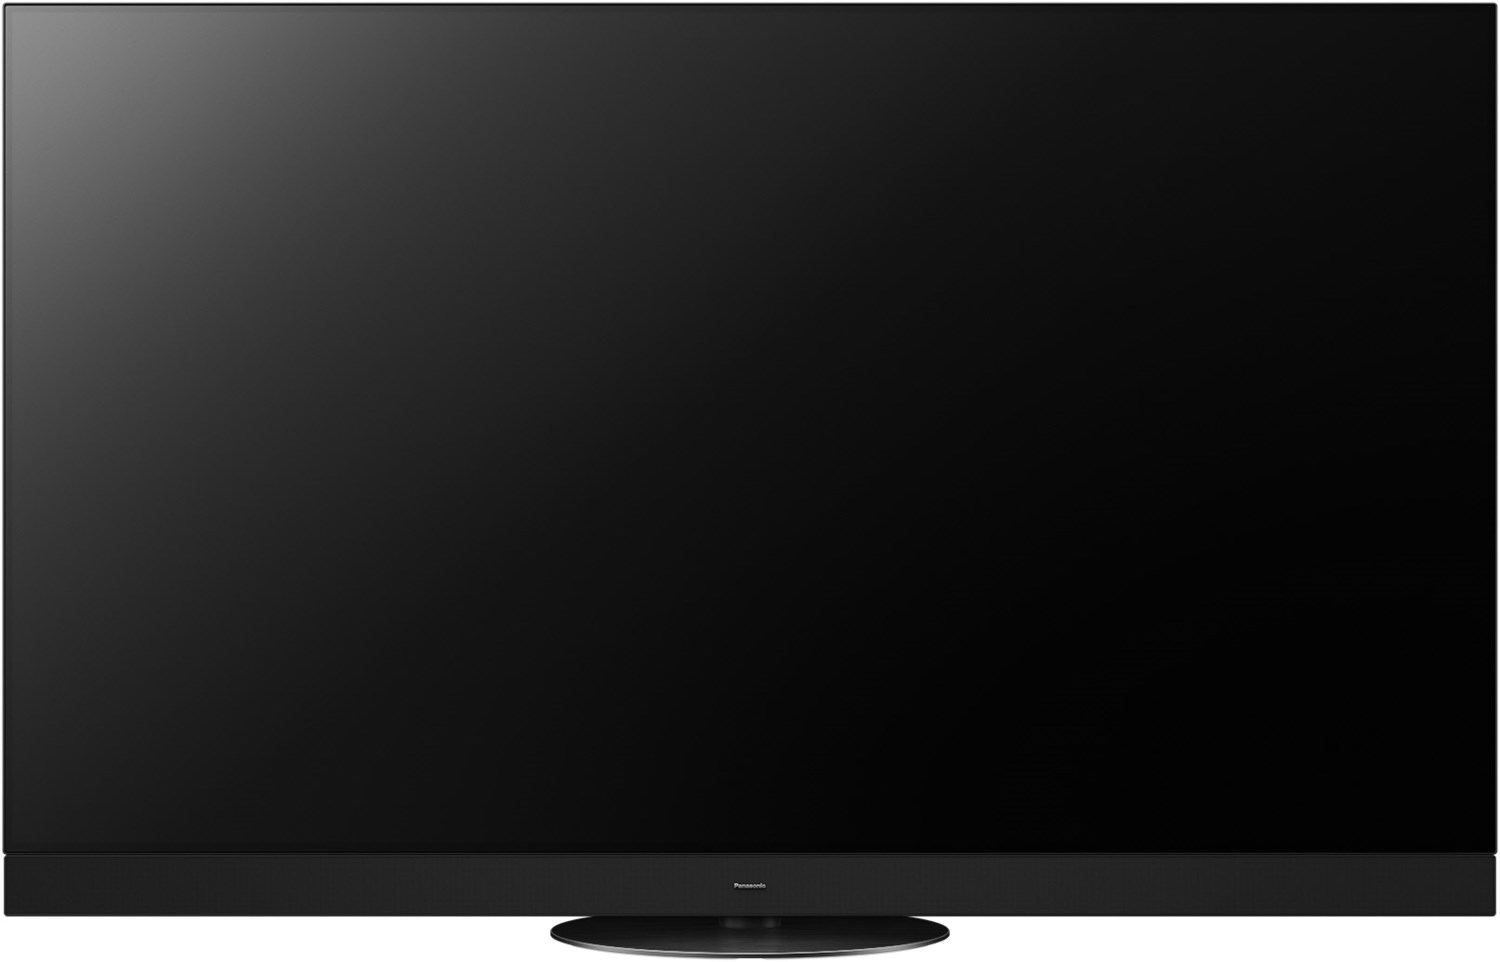 Panasonic Master OLED 65 Zoll (164cm) UHD TV schwarz